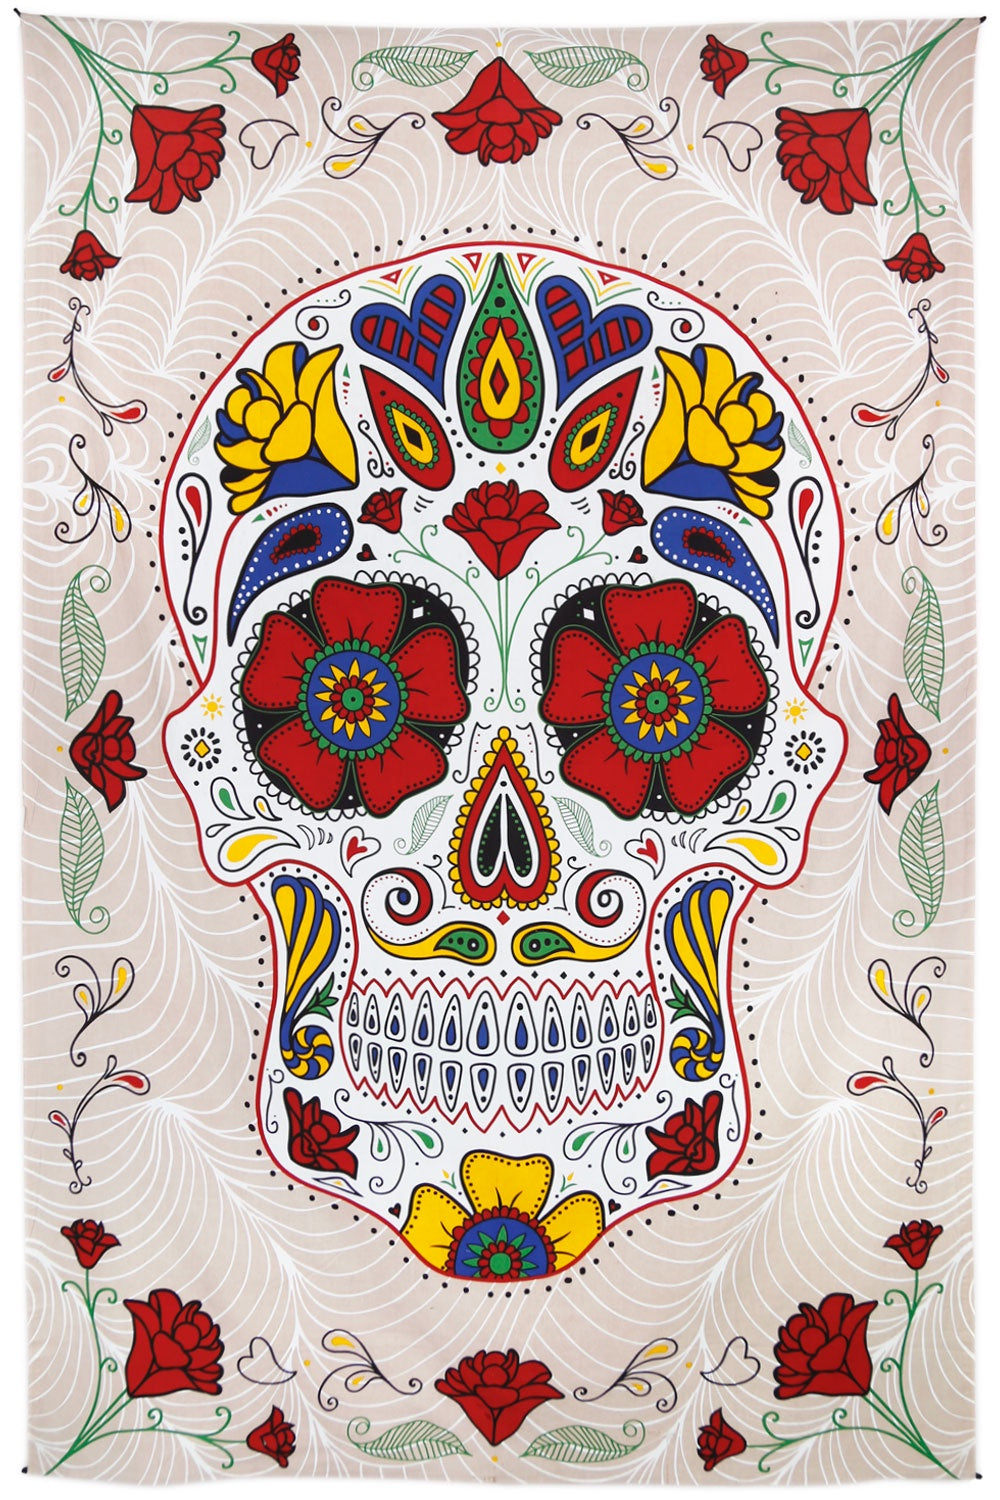 White Sugar Skull Tapestry SALE